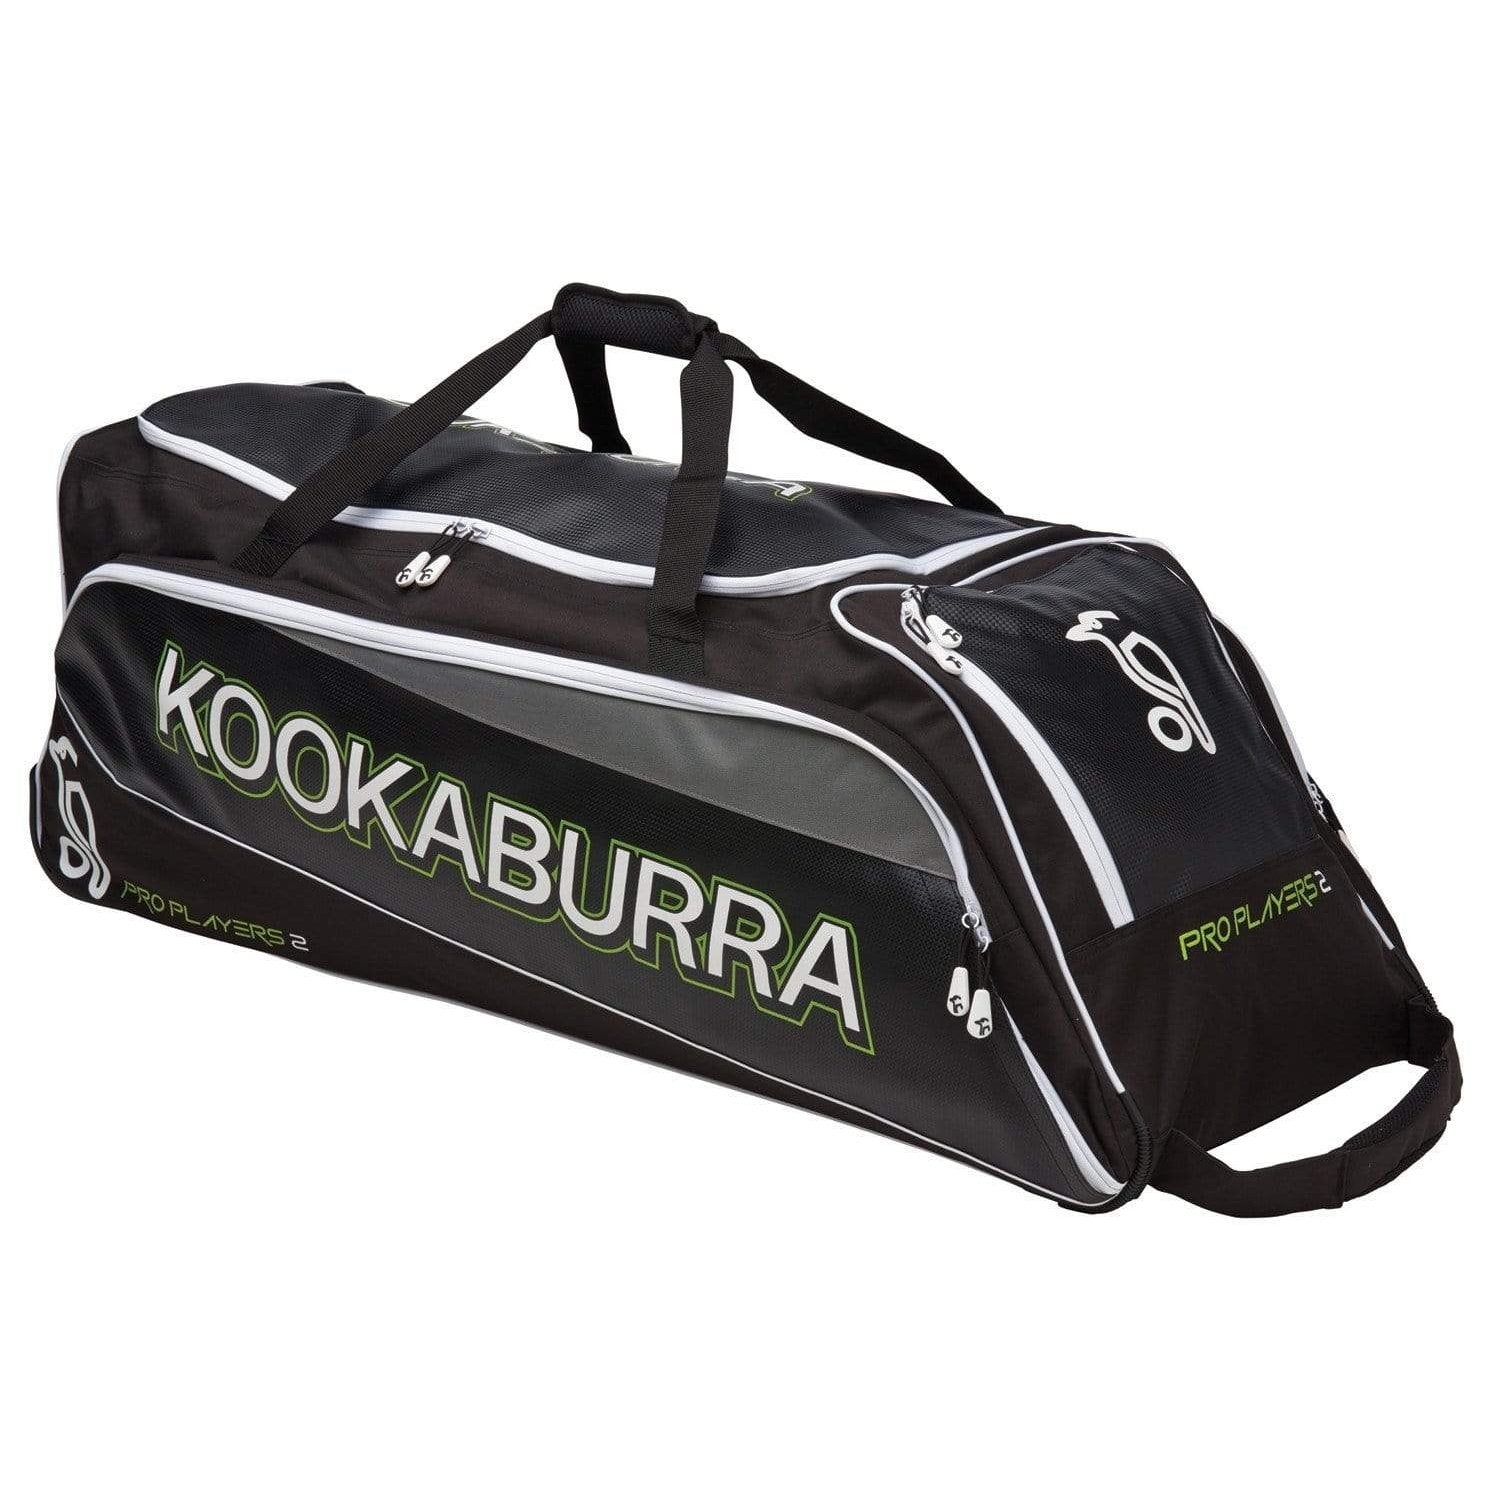 Kookaburra Cricket Bags Kookaburra Pro Players 2 Black/Lime Cricket Kit Bag